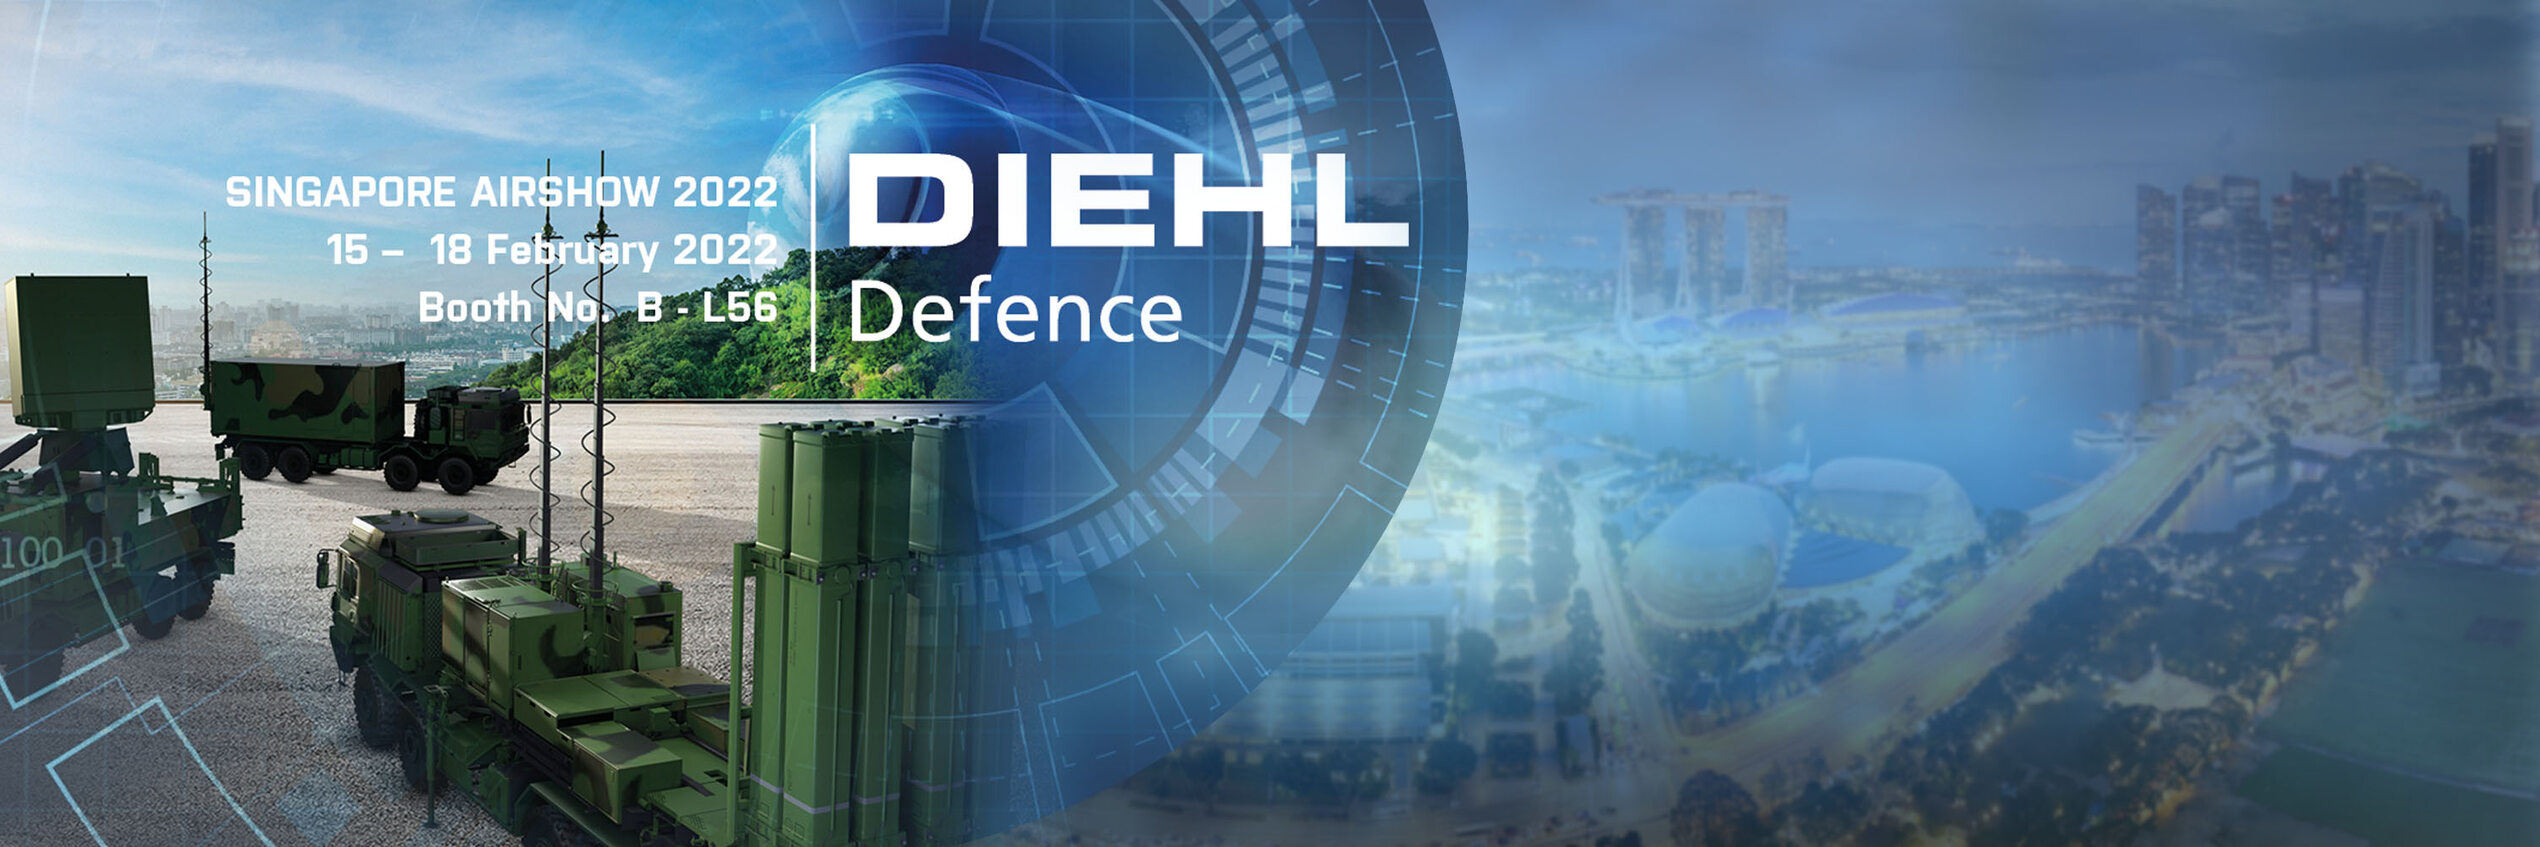 Singapore Airshow – Diehl Defence displays missile products